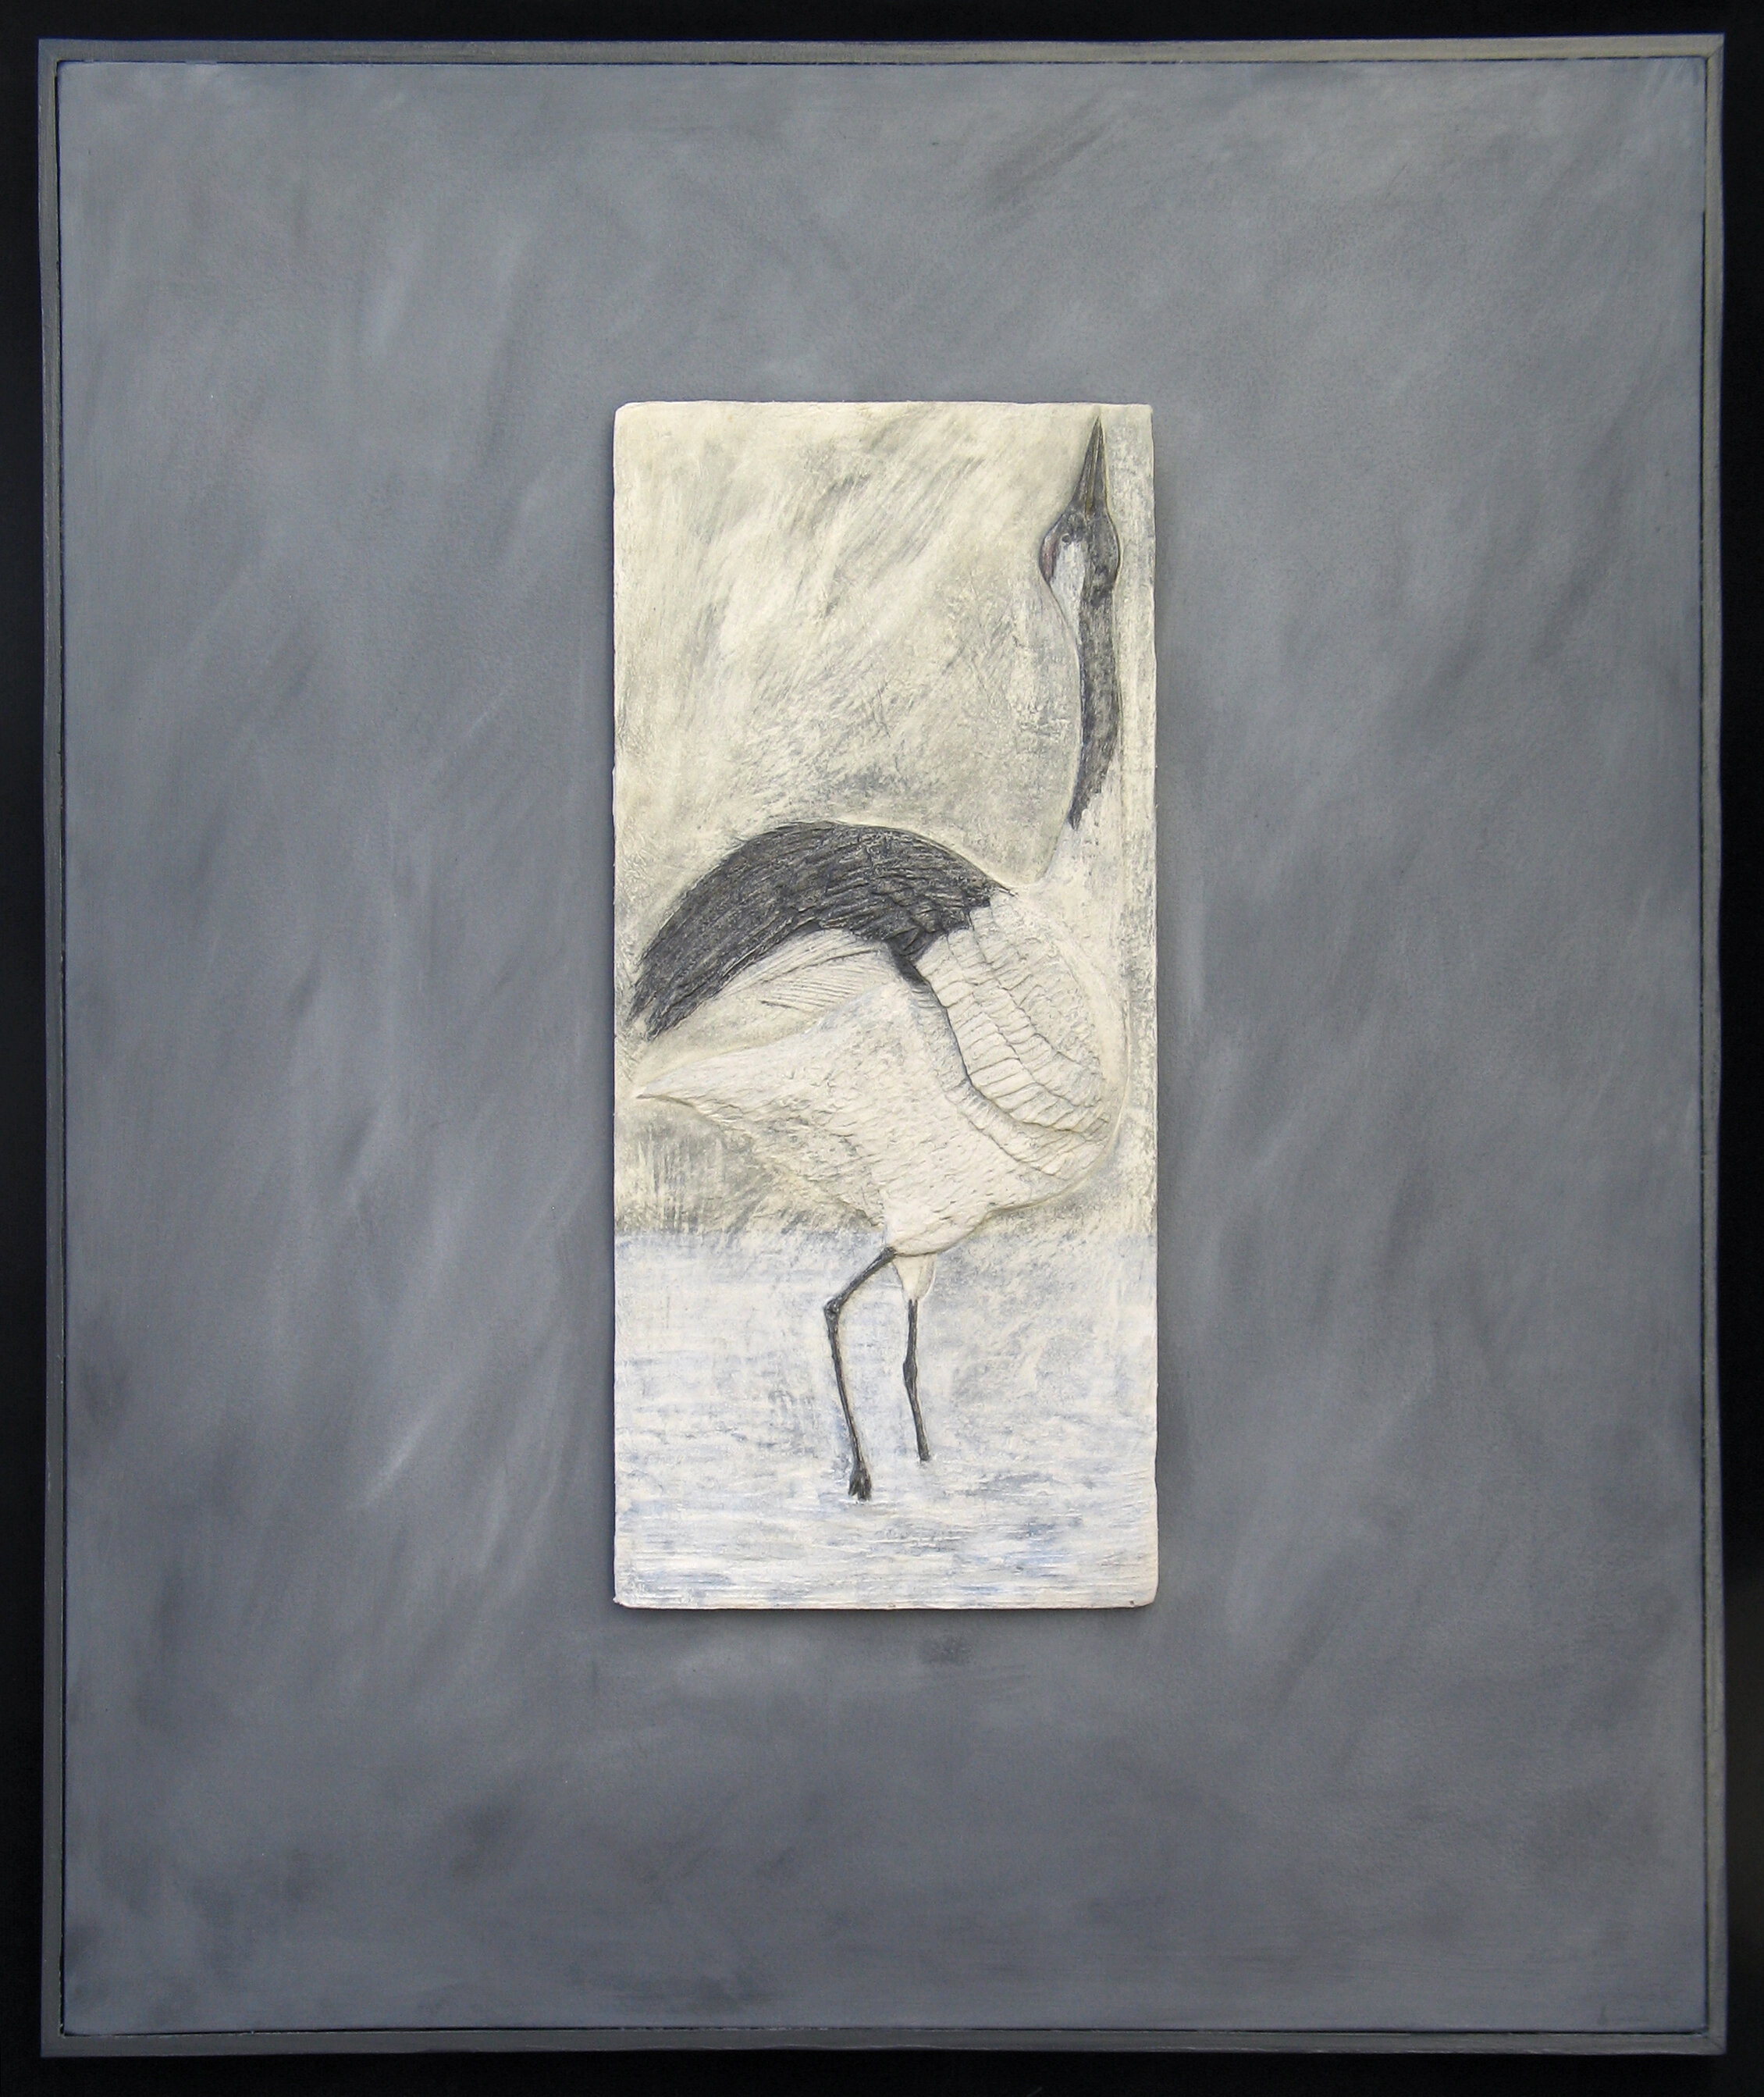 Crane in gray